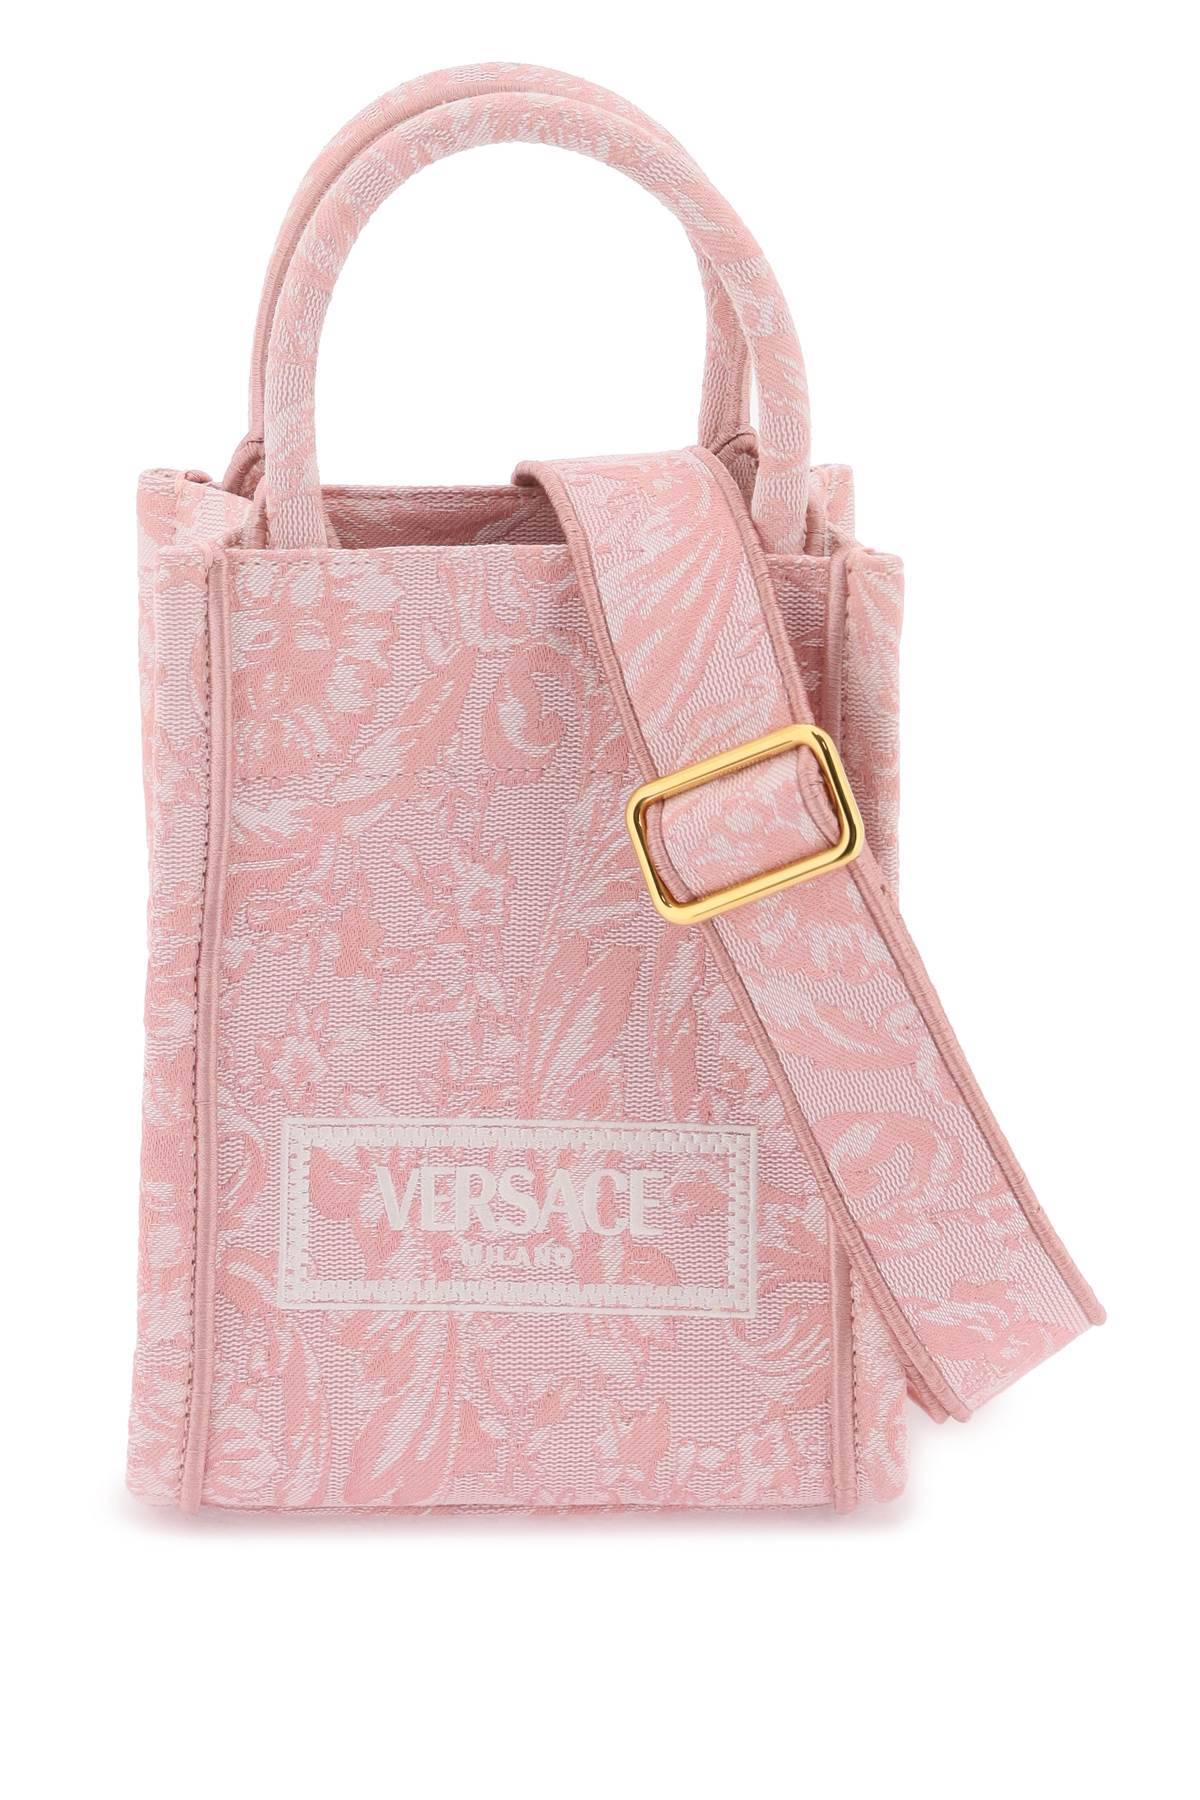 Versace VERSACE athena barocco mini tote bag